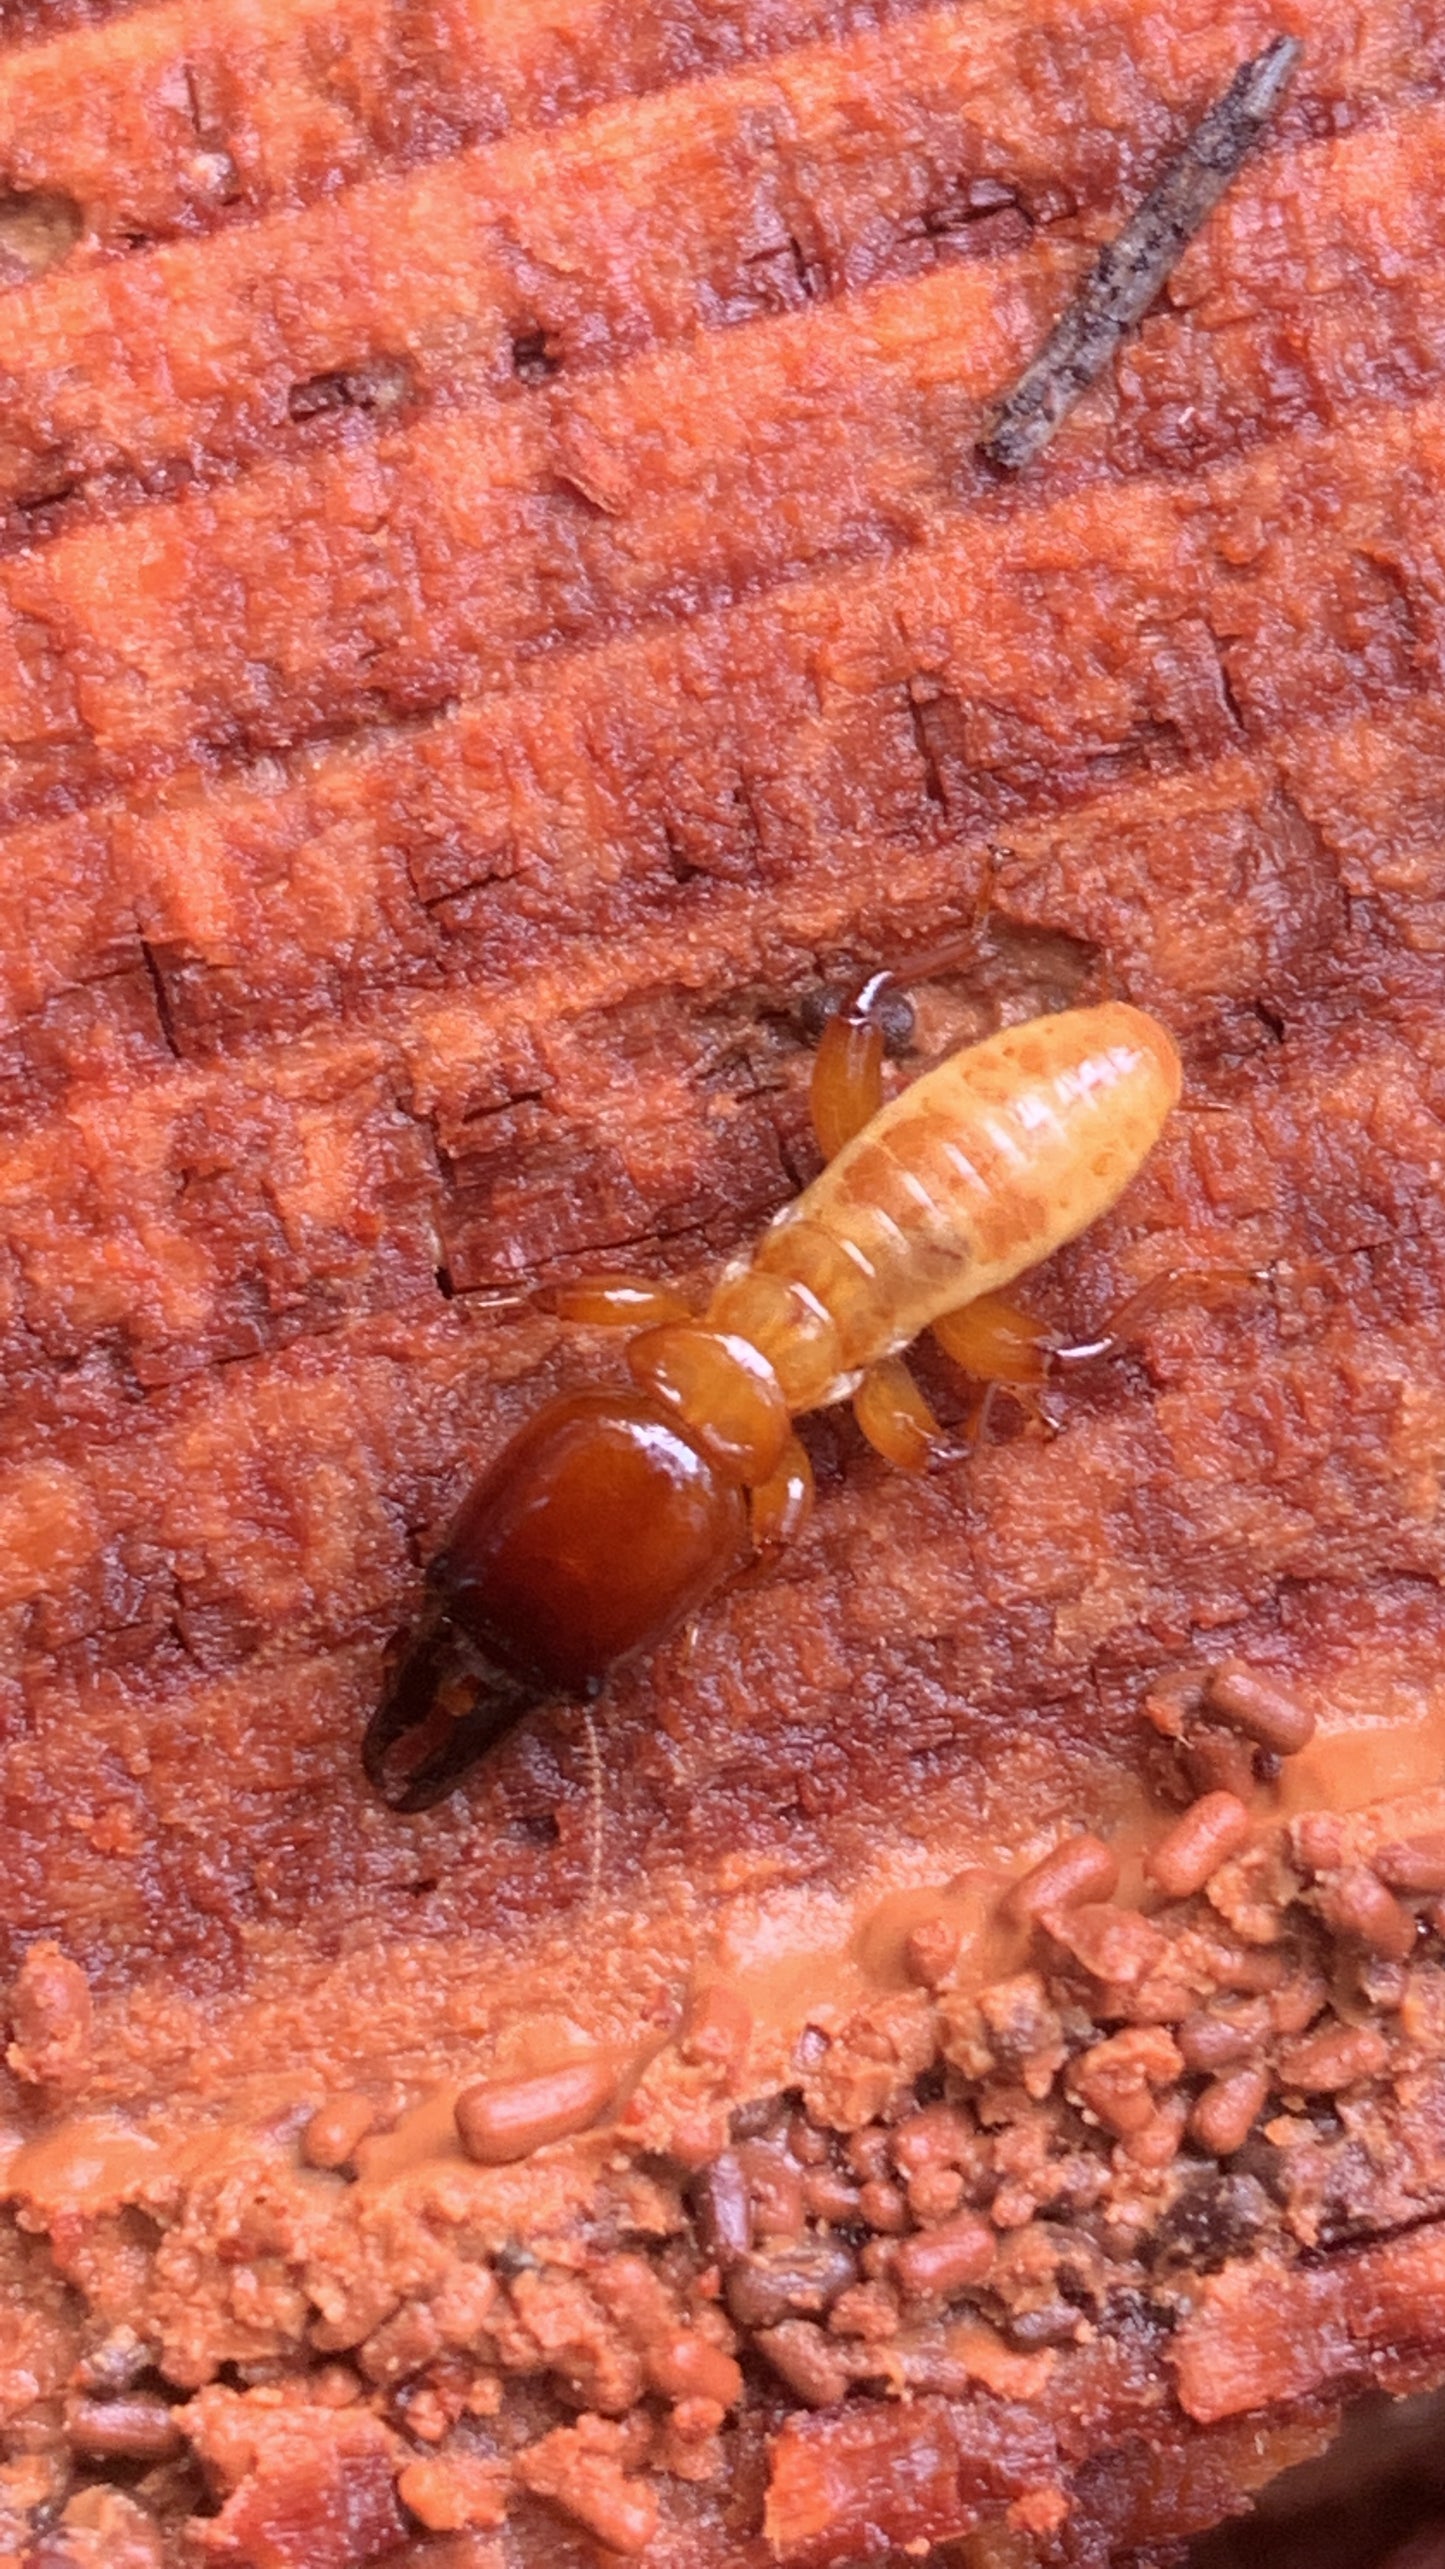 Zootermopsis angusticollis - Pacific Dampwood Termite